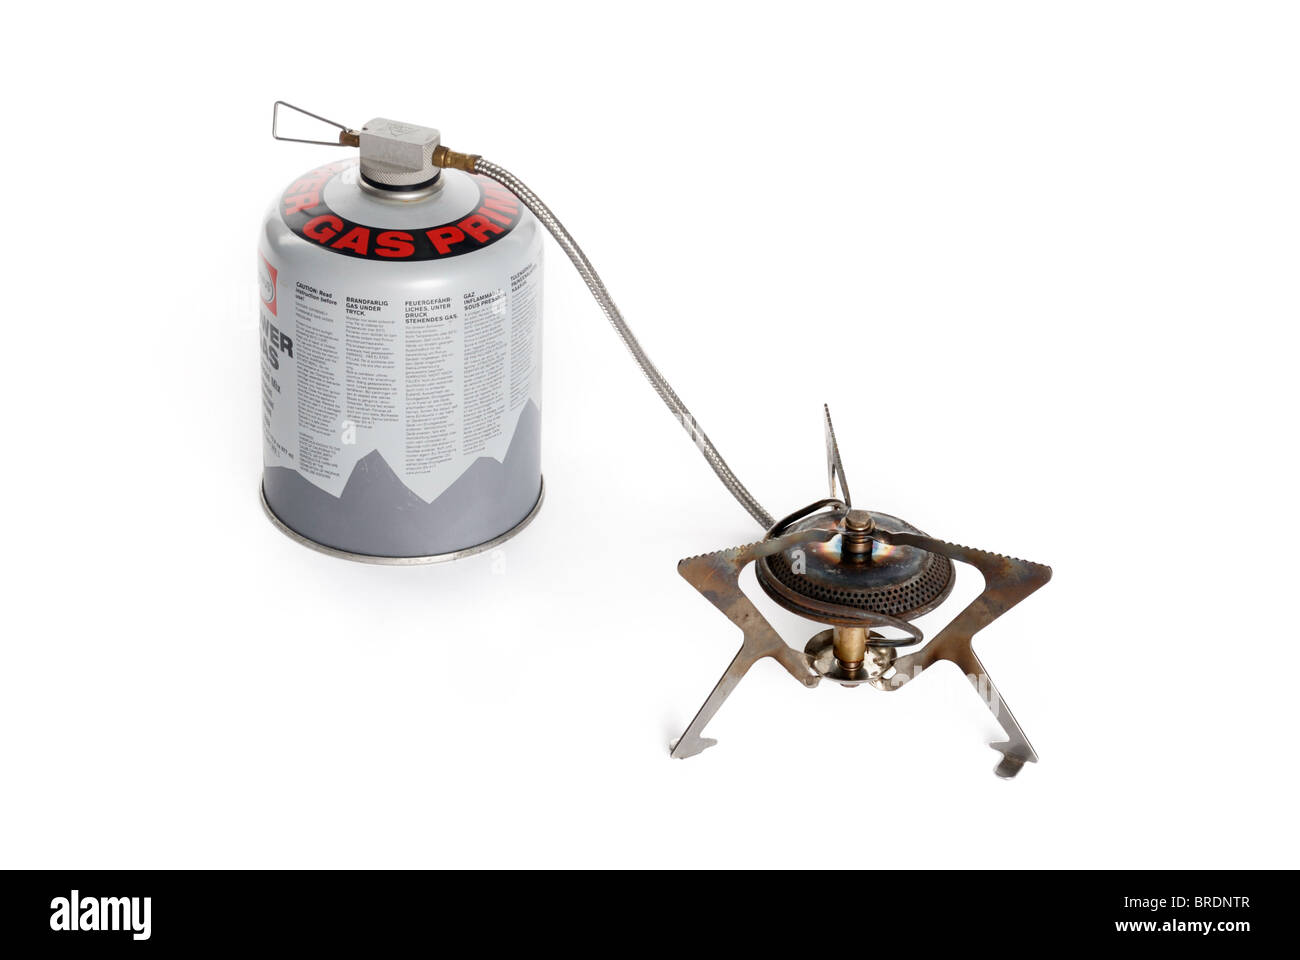 Portable gas cartridge stove Stock Photo